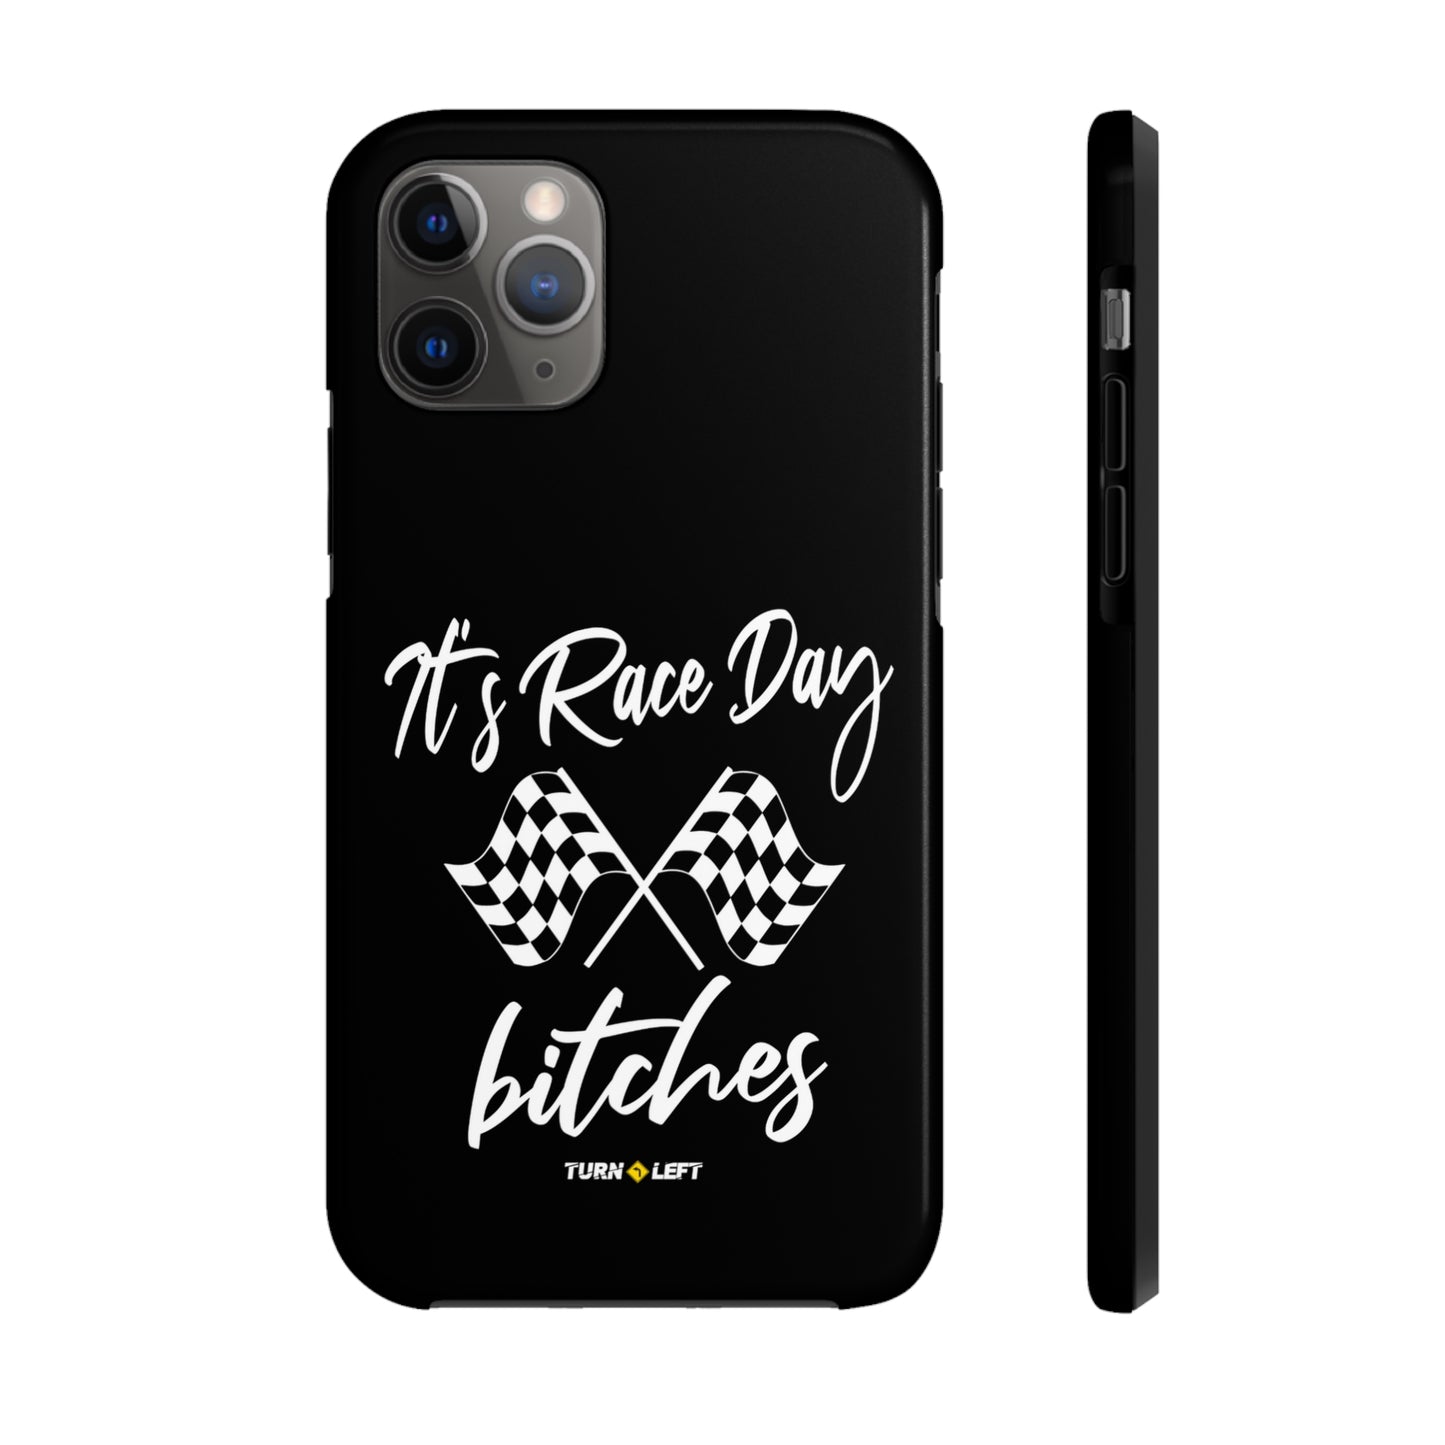 It's Raceday Bitches Tough Phone Cases